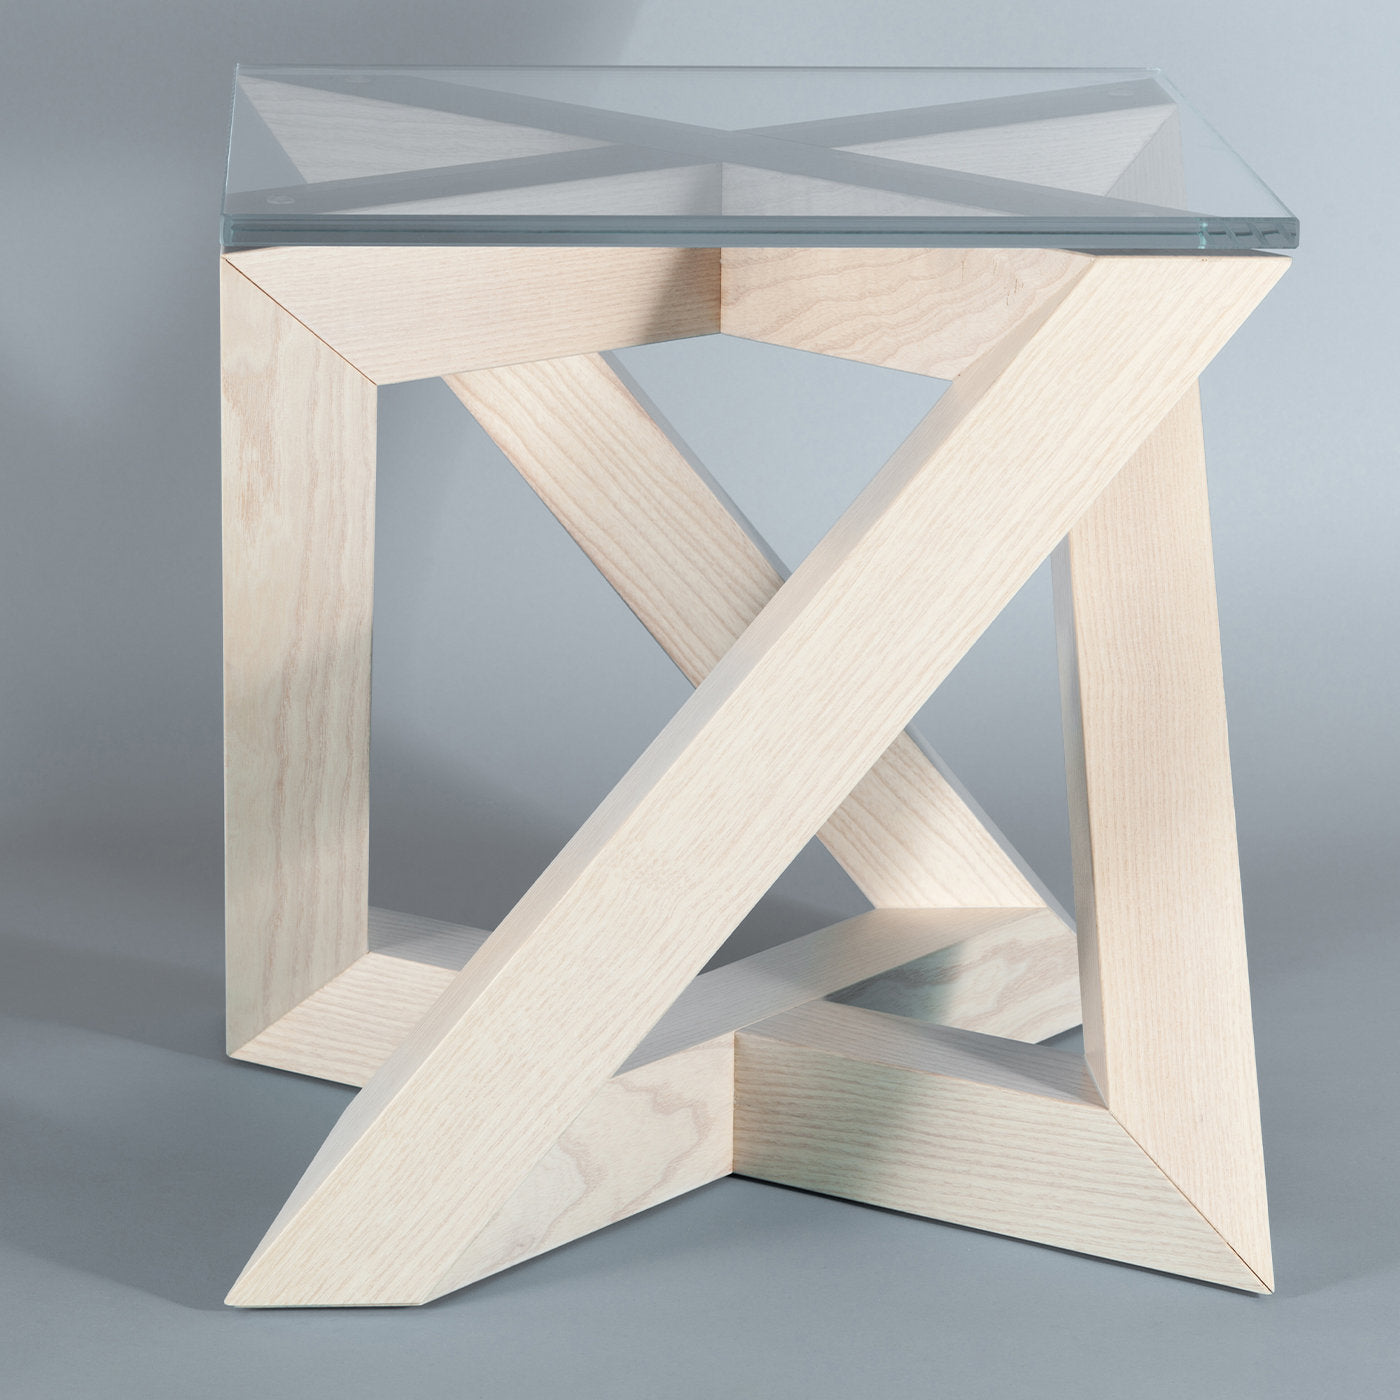 RK Side Table #3 by Antonio Saporito - Alternative view 3